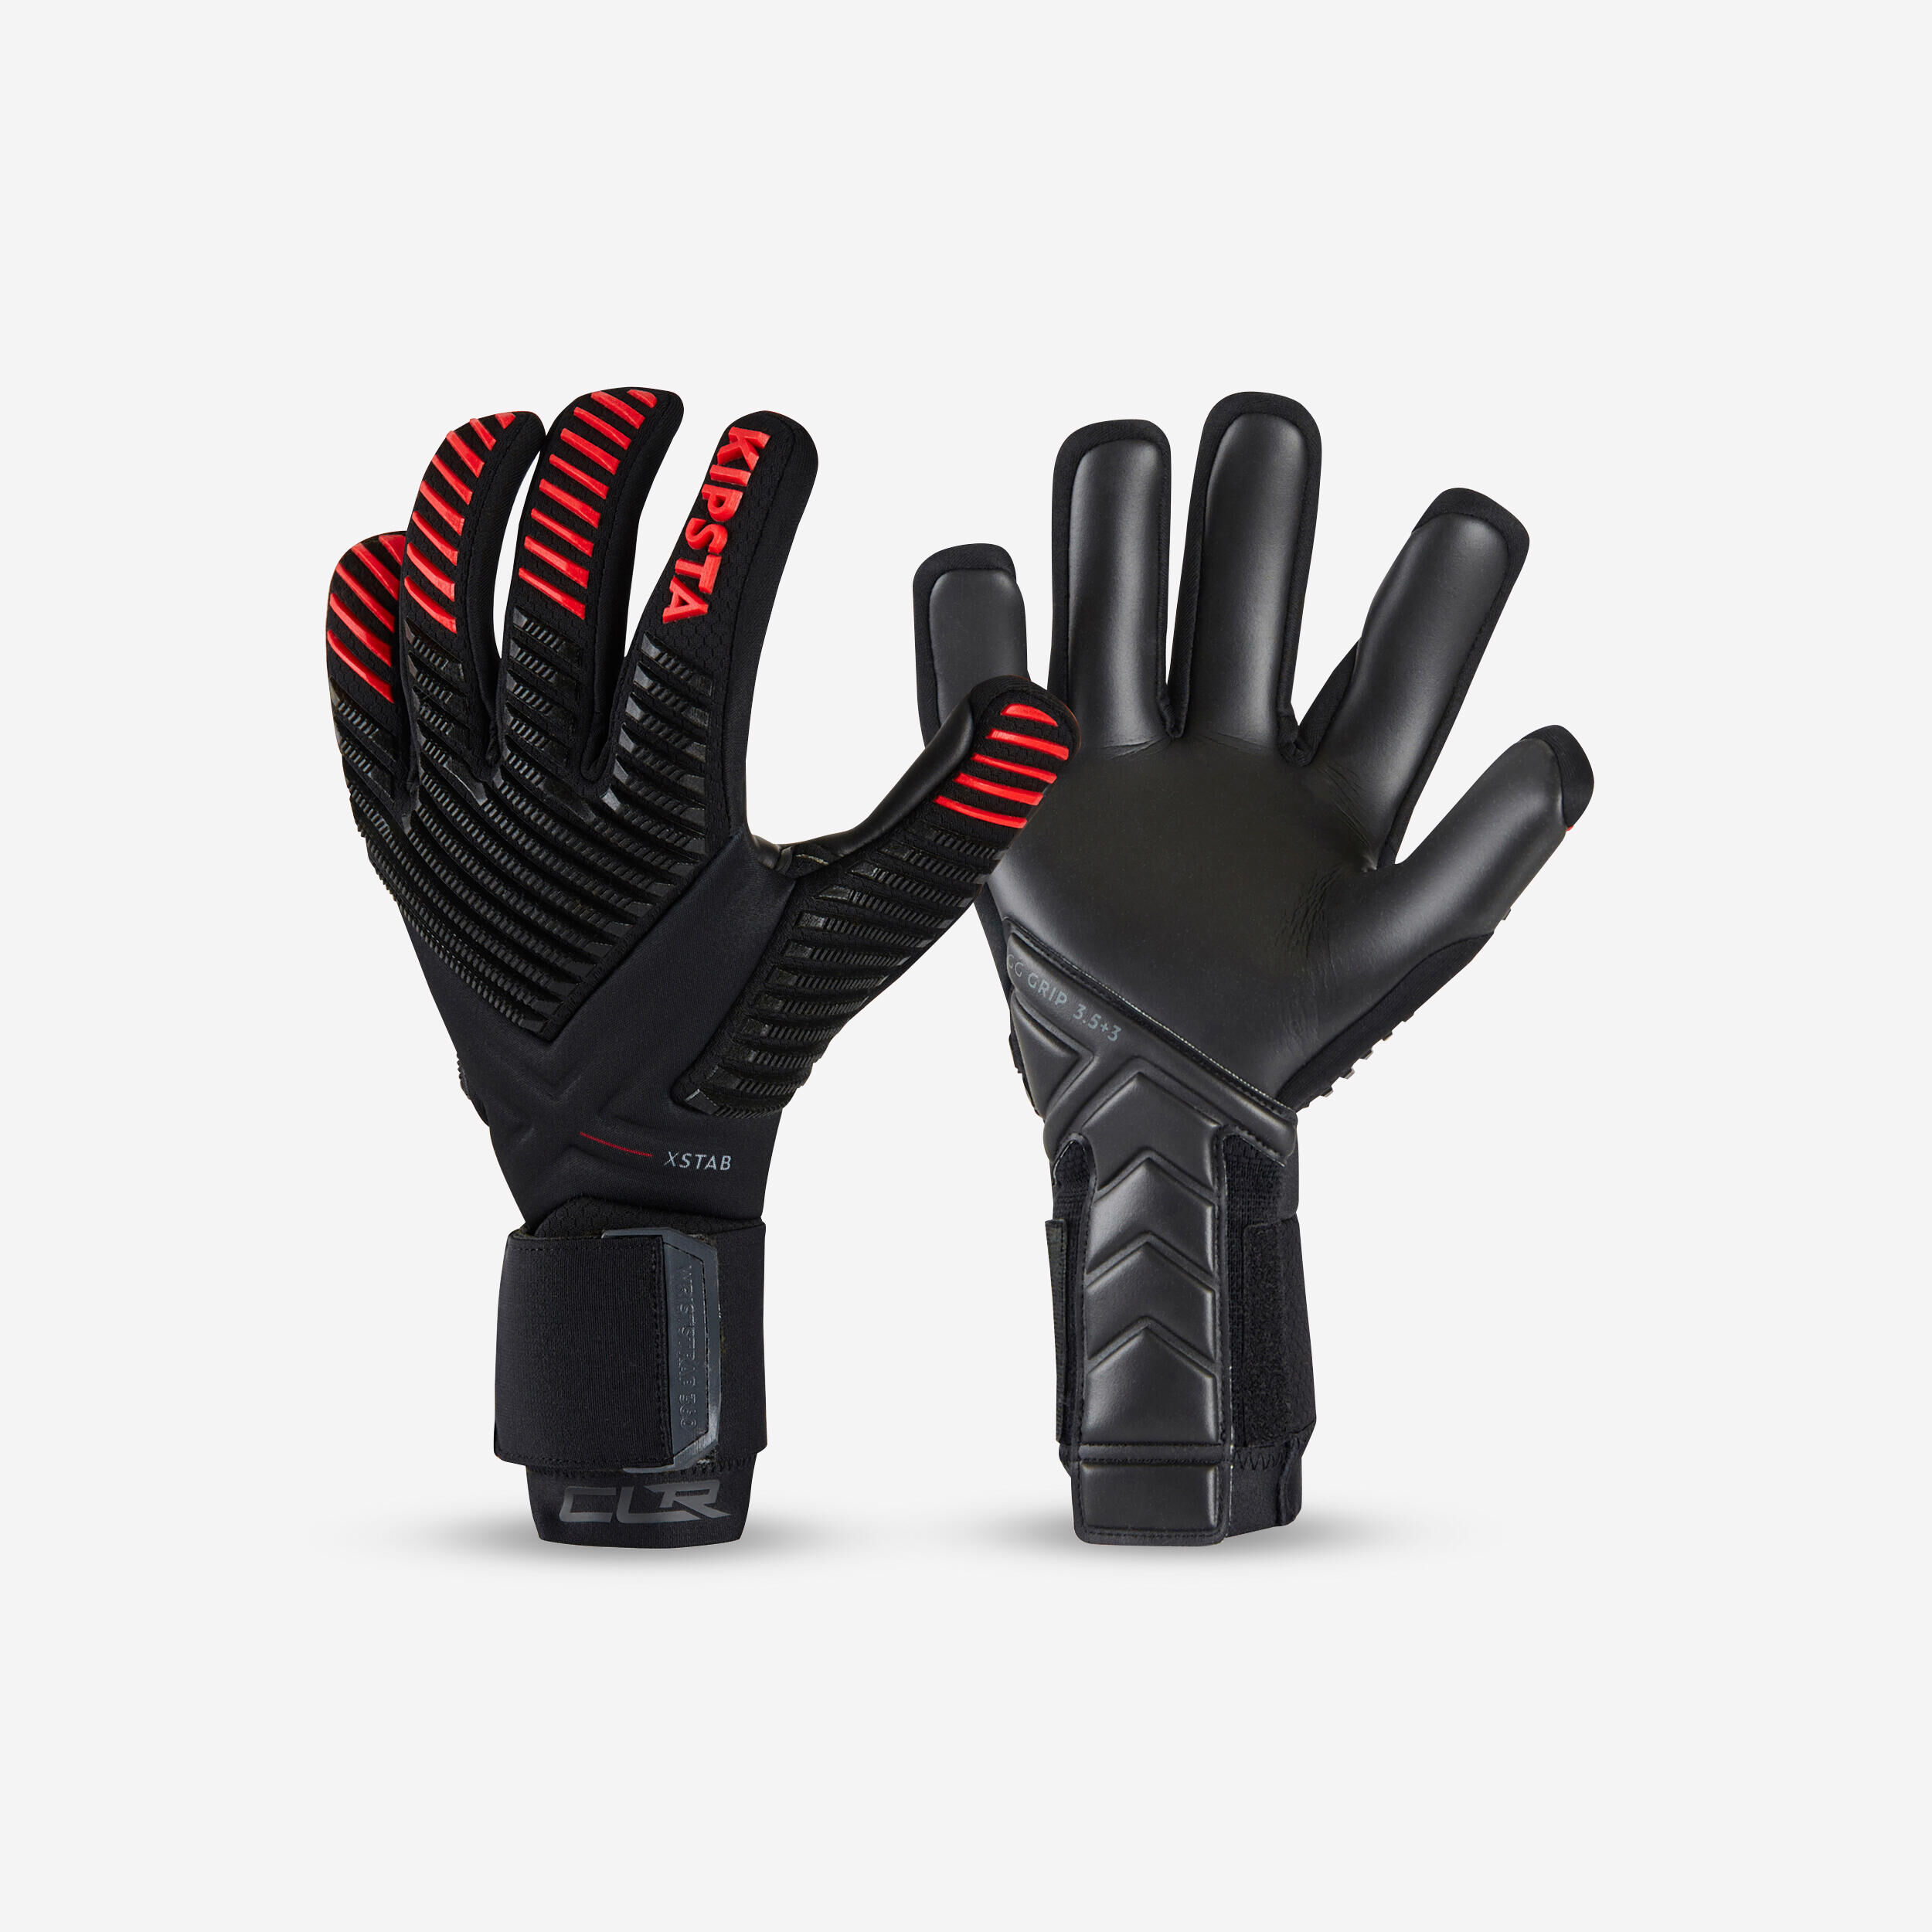 KIPSTA Adult Football Goalkeeper Gloves F900 CLR - Black/Red